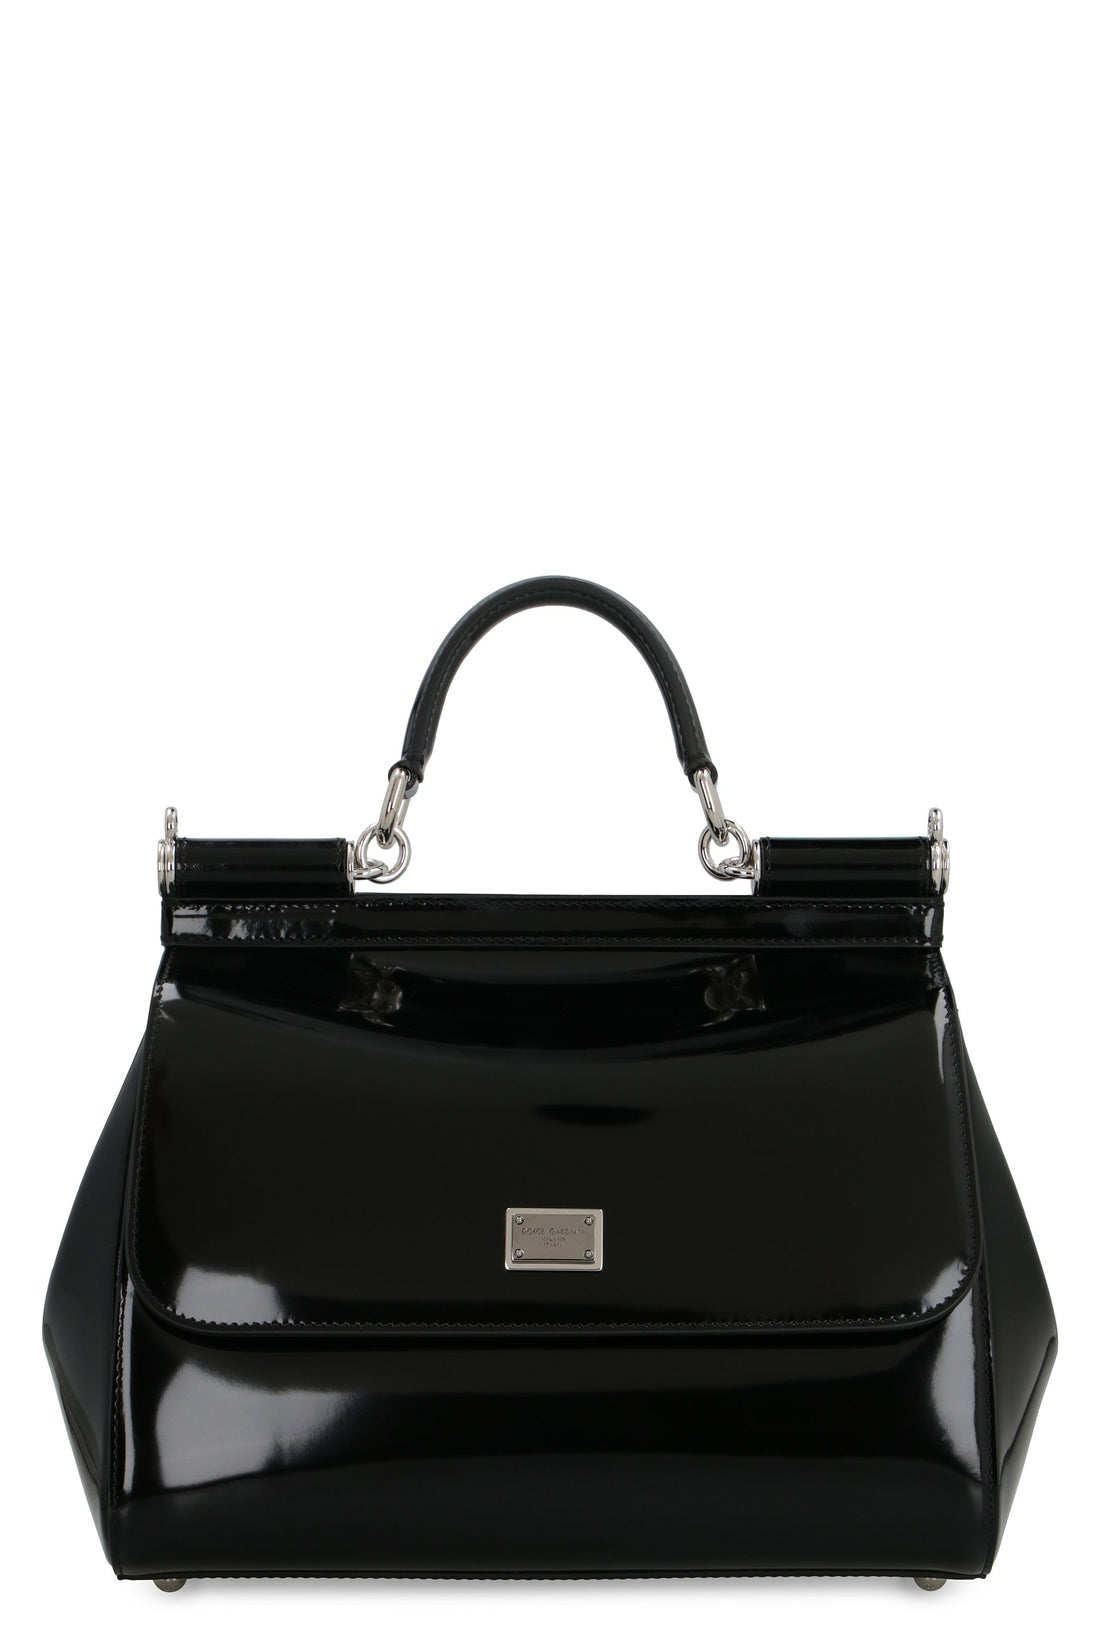 Dolce & Gabbana-OUTLET-SALE-KIM DOLCE&GABBANA - Sicily leather handbag-ARCHIVIST